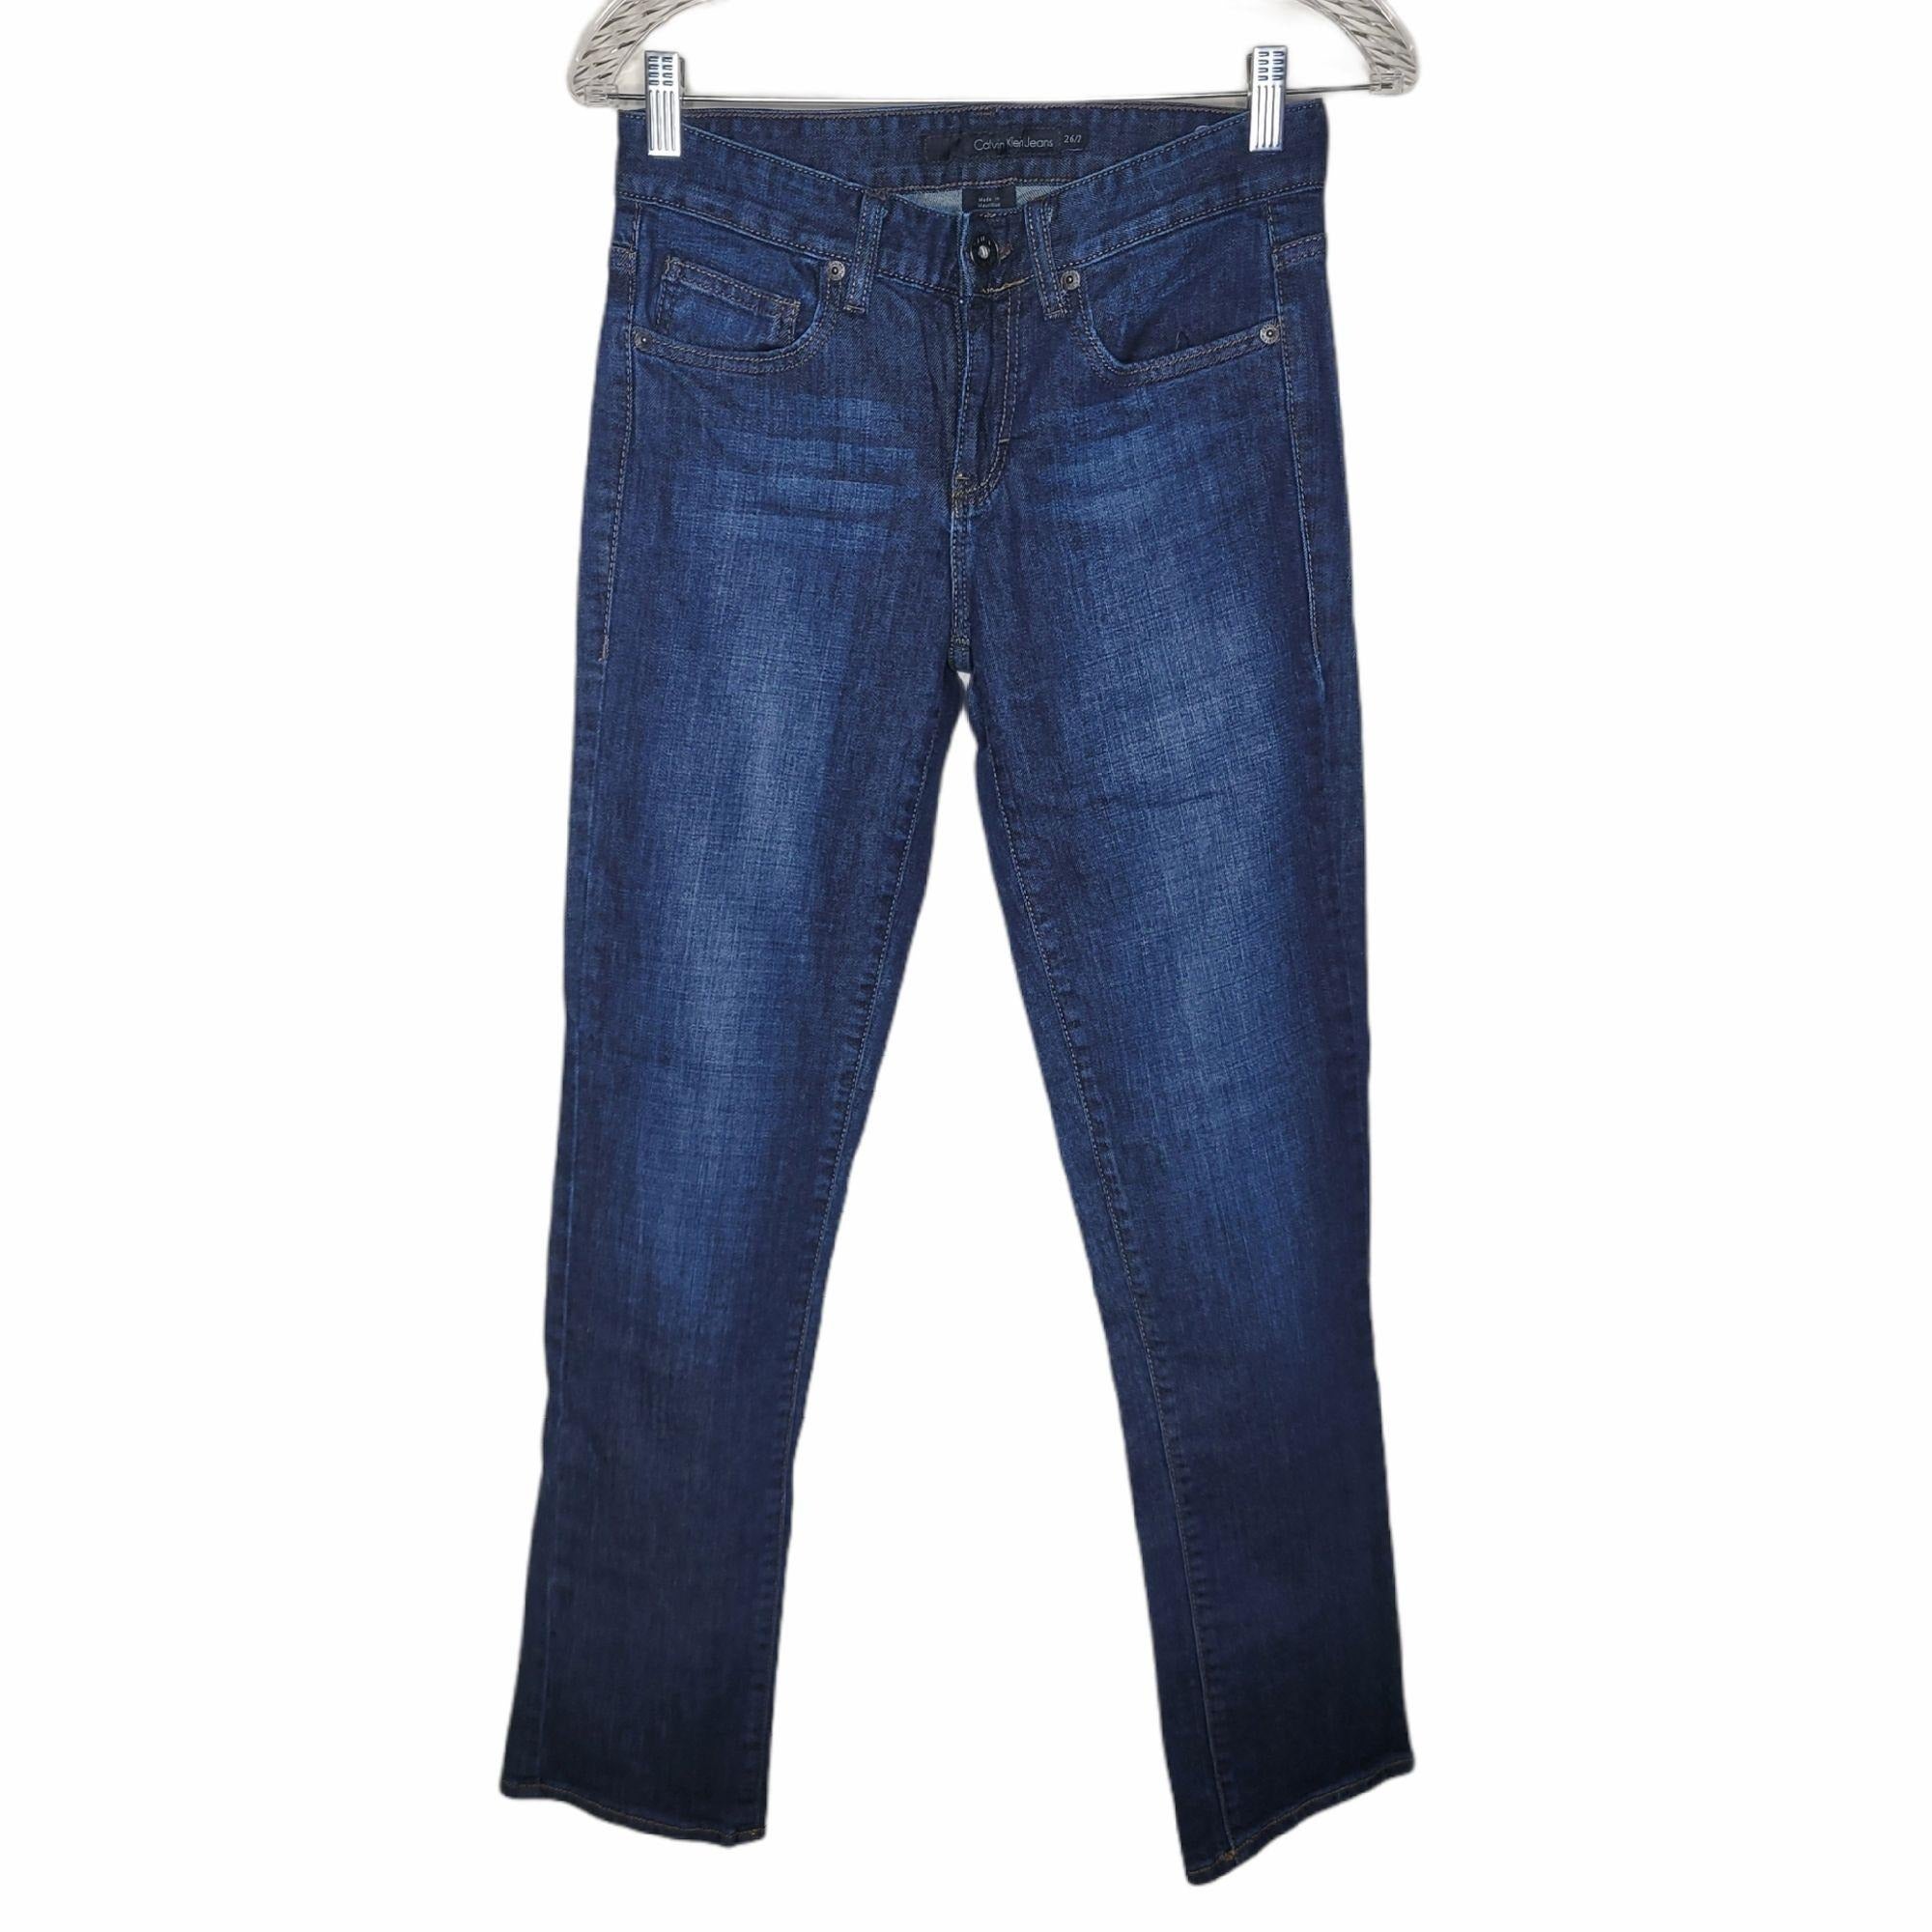 Calvin Klein Jeans Blue Jean Skinny Pants Size 26/2